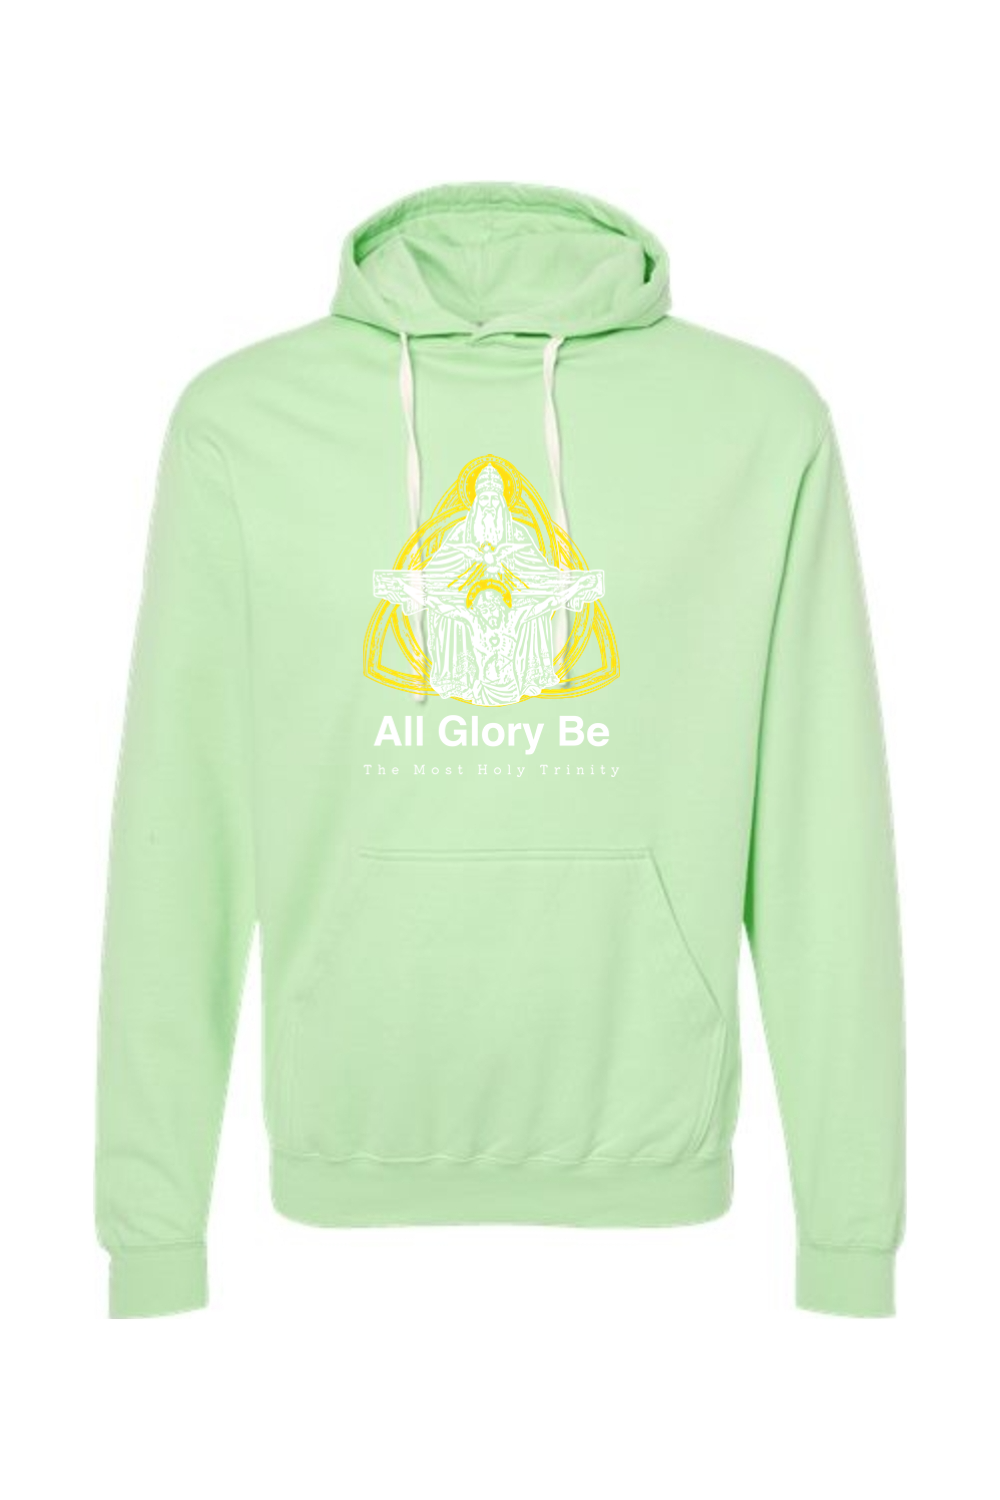 All Glory Be - Holy Trinity Hoodie Sweatshirt